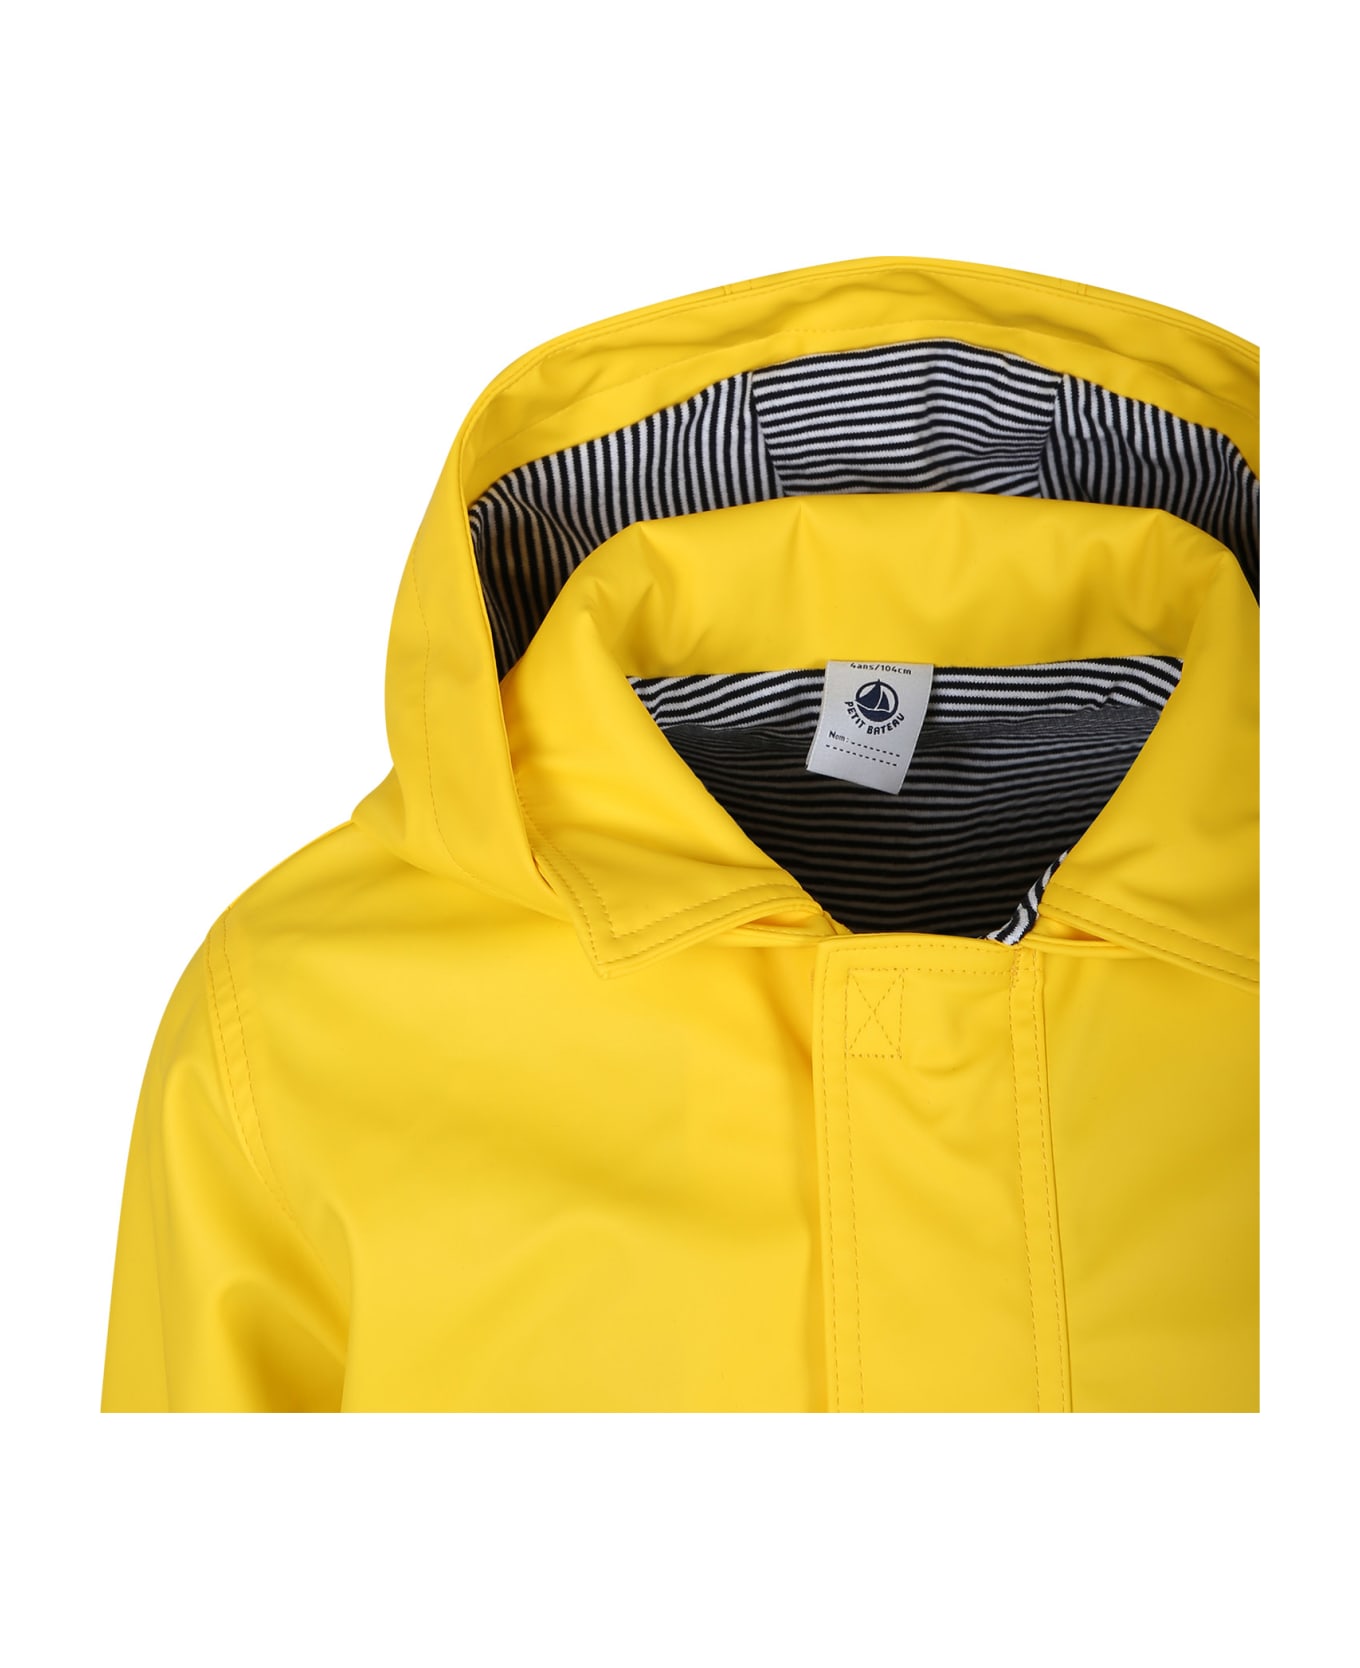 Petit Bateau Yellow Raincoat For Kids - Yellow